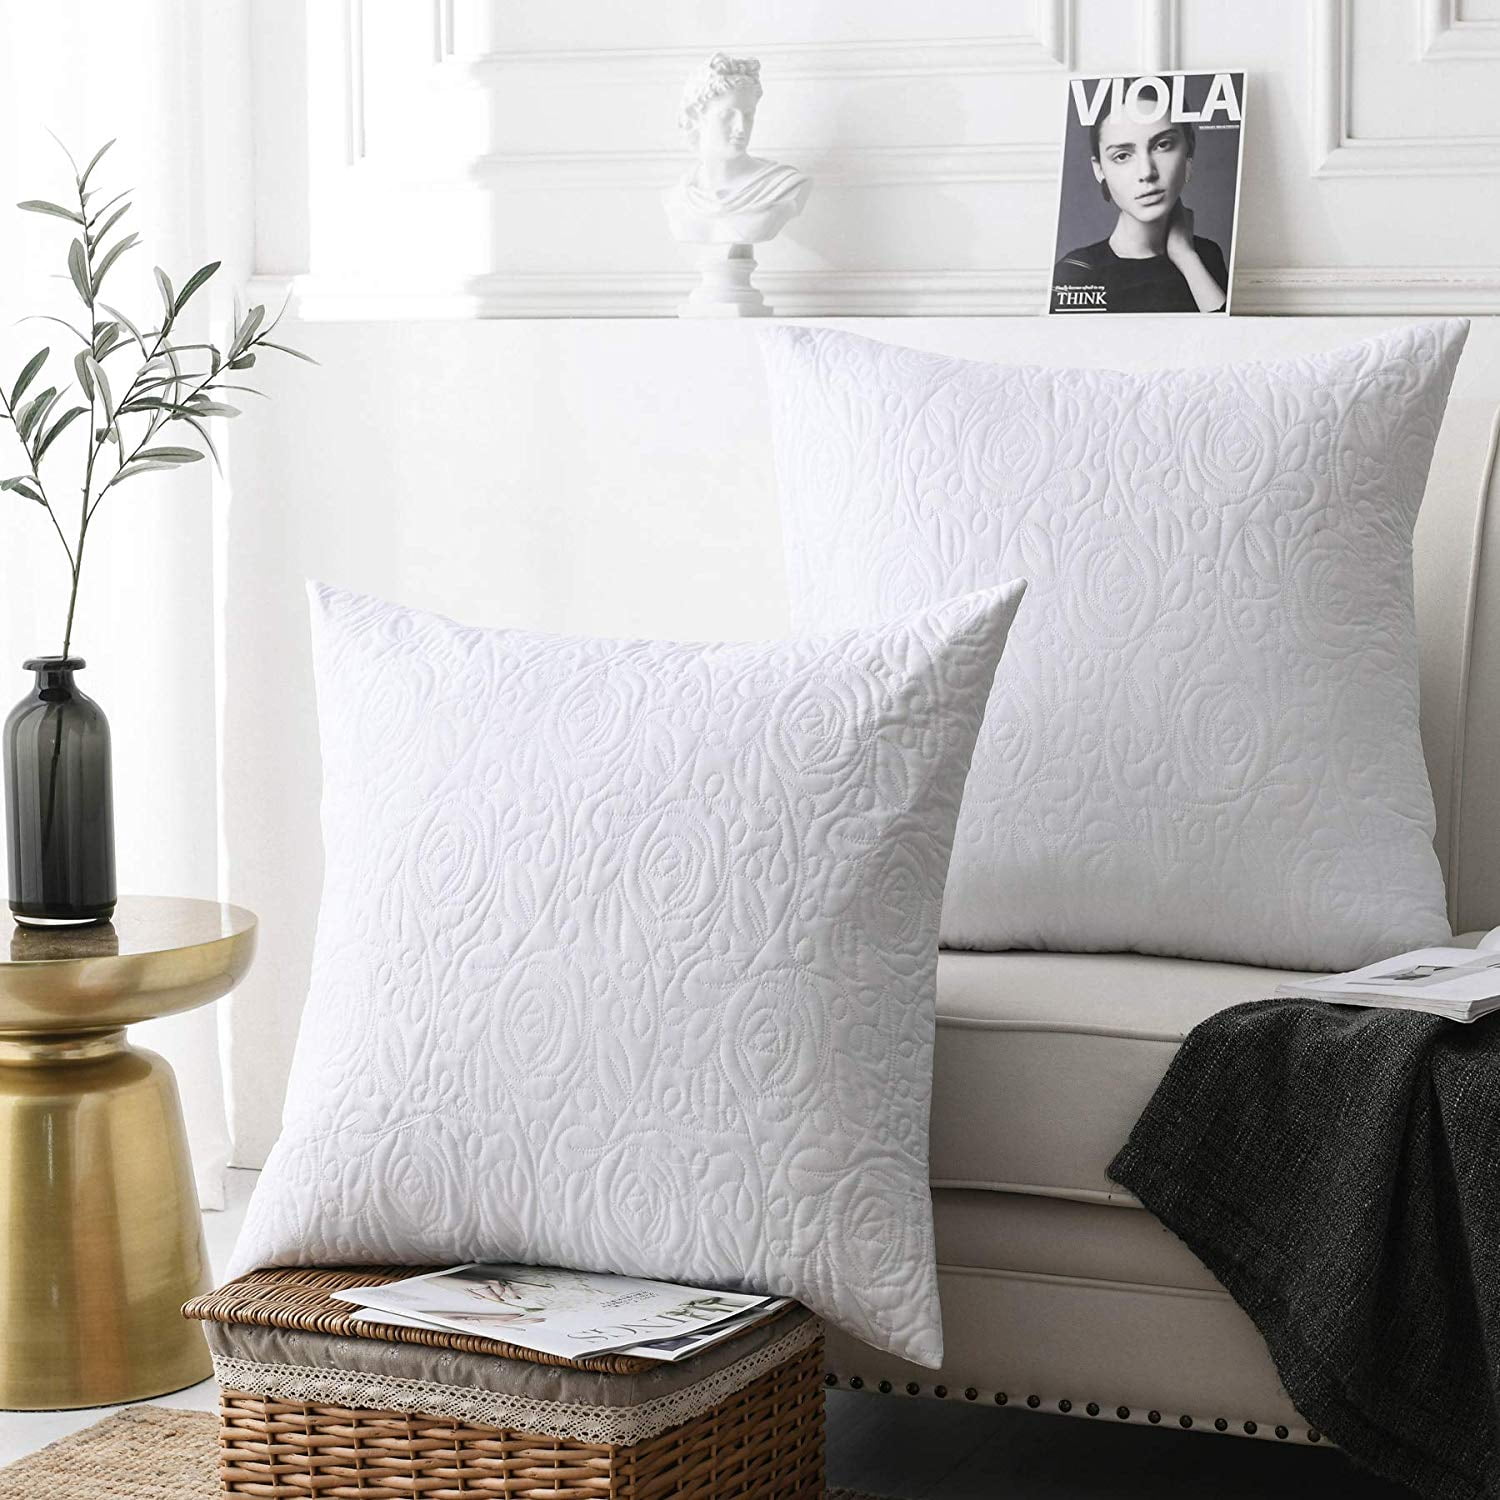 Bedsure Euro Pillow Sham Covers 26x26 Set of 2 Super Soft and Cozy White European Pillow Shams Brushed Microfiber Euro Sham Pillow Covers 